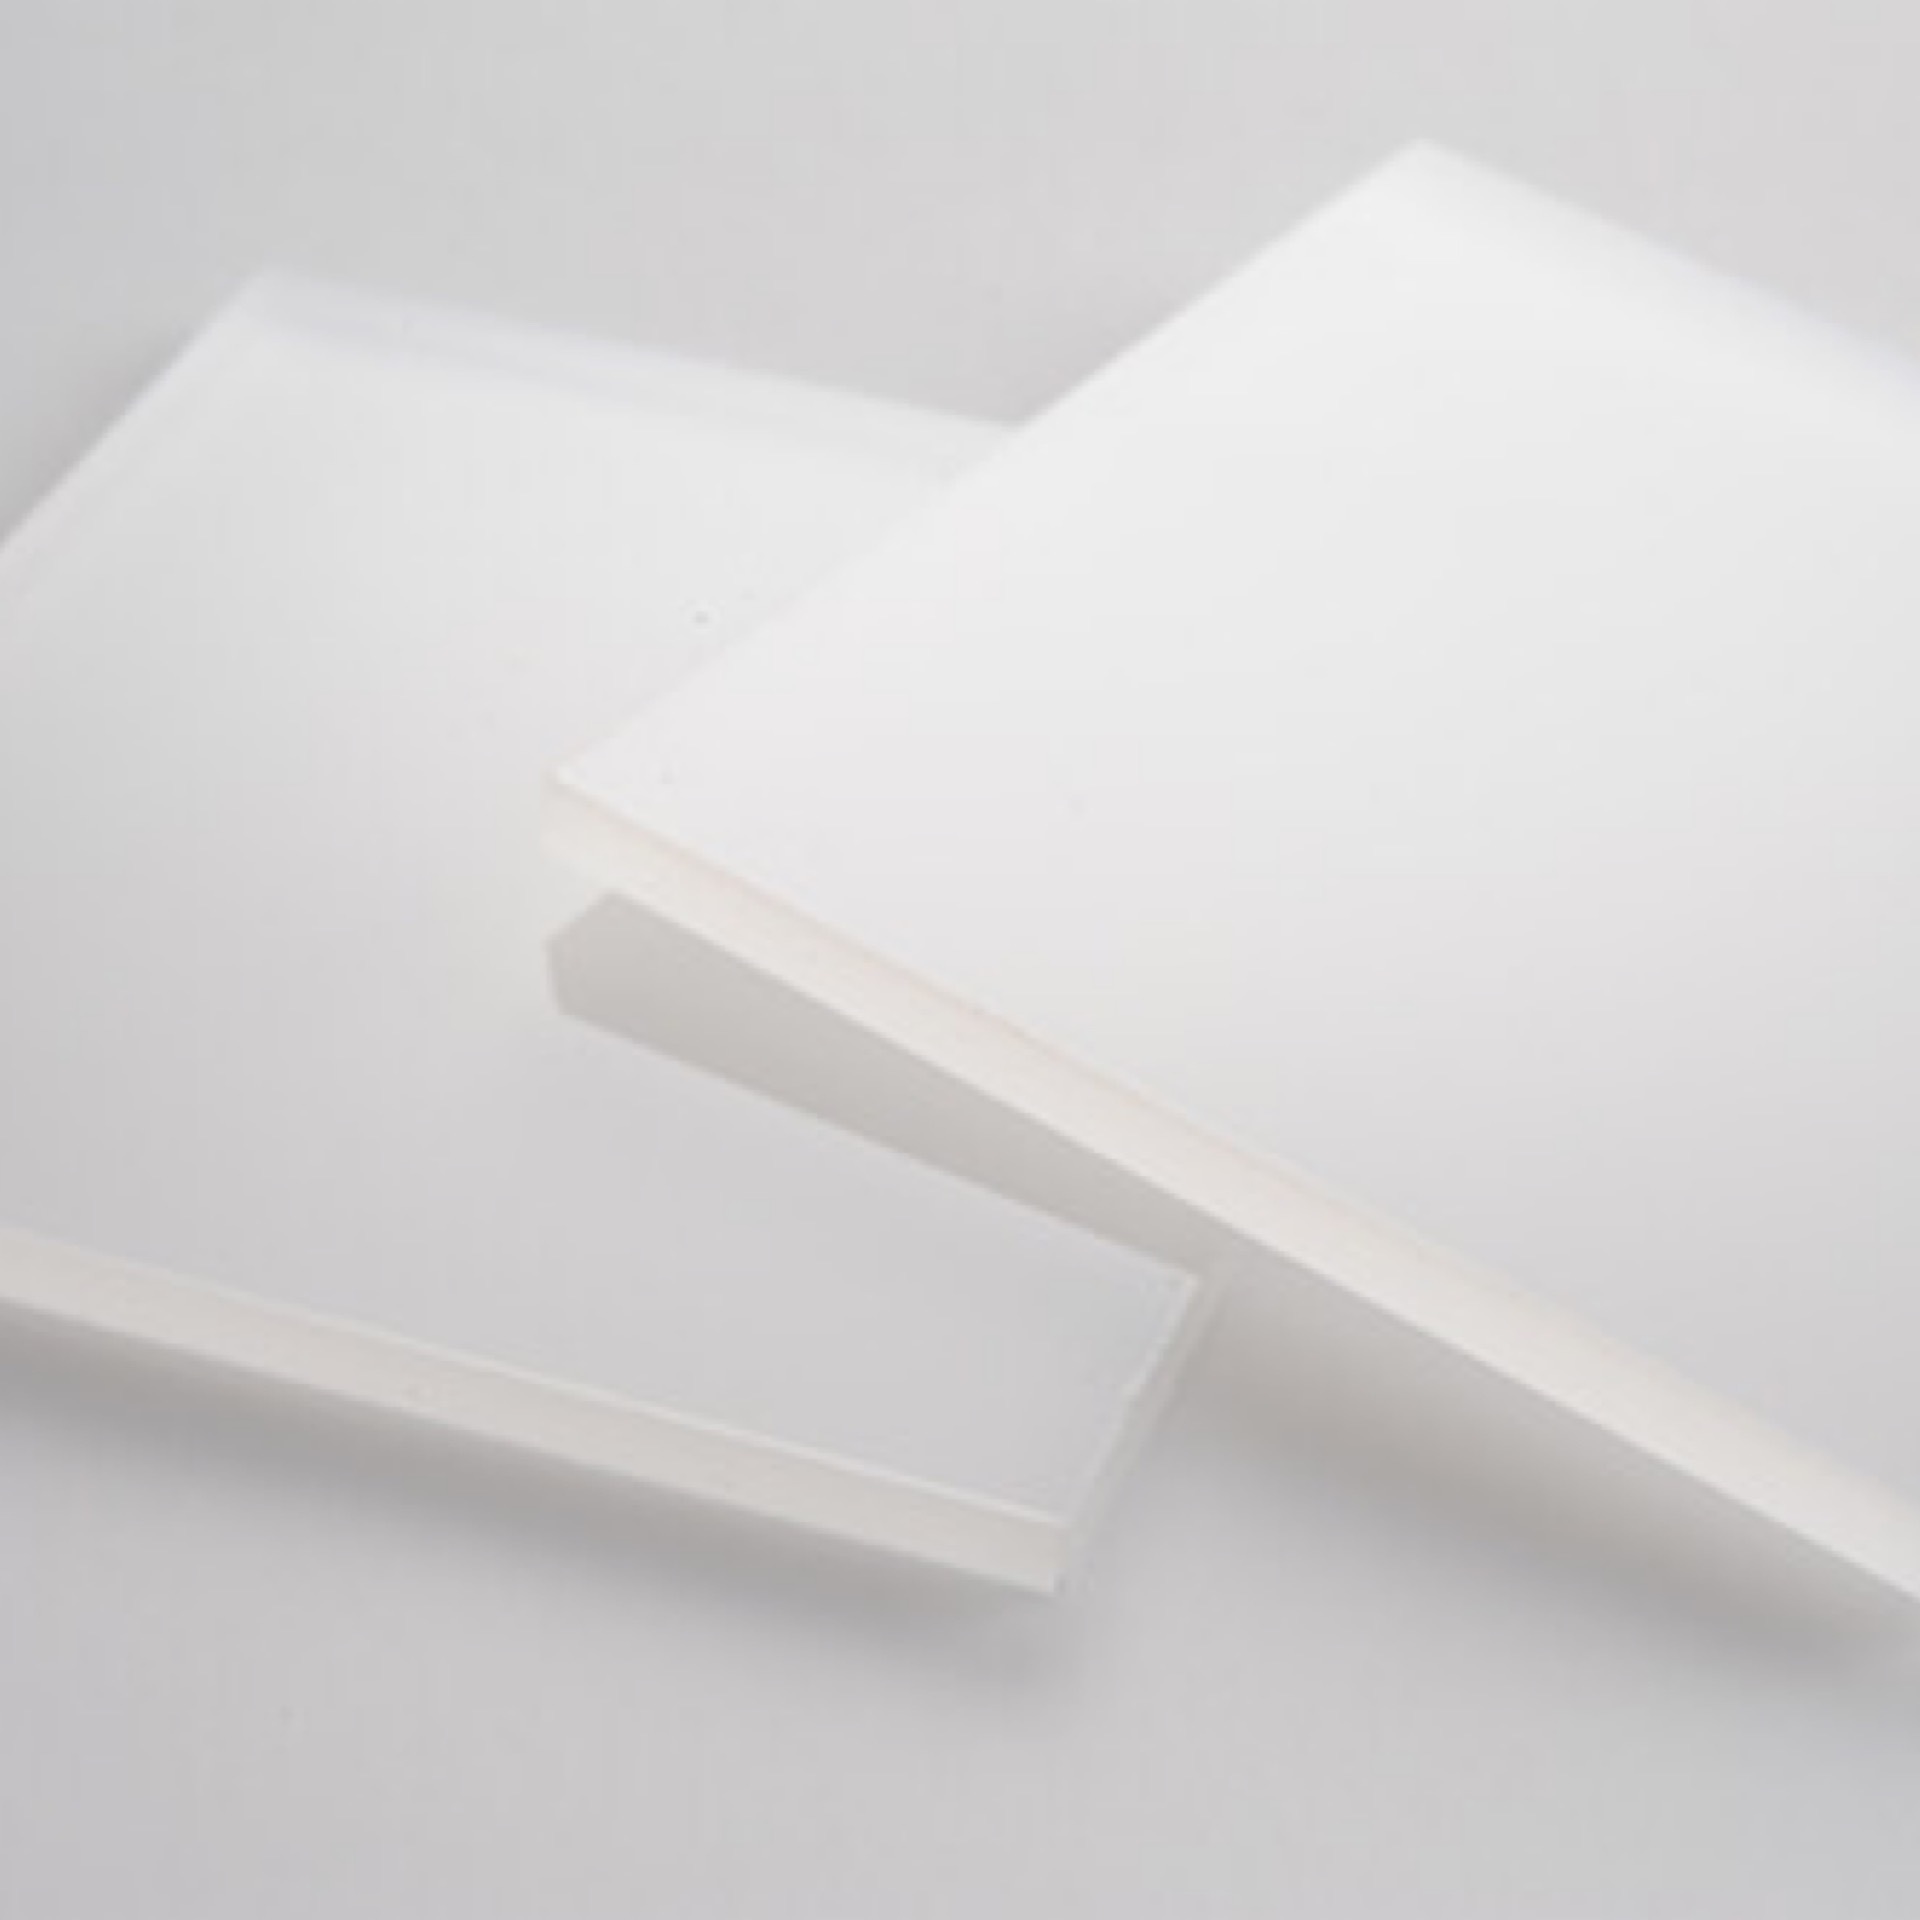 Black Opaque 2025 P95 Matte/Glossy Acrylic Sheet Plexiglass – T&T Plastic  Land